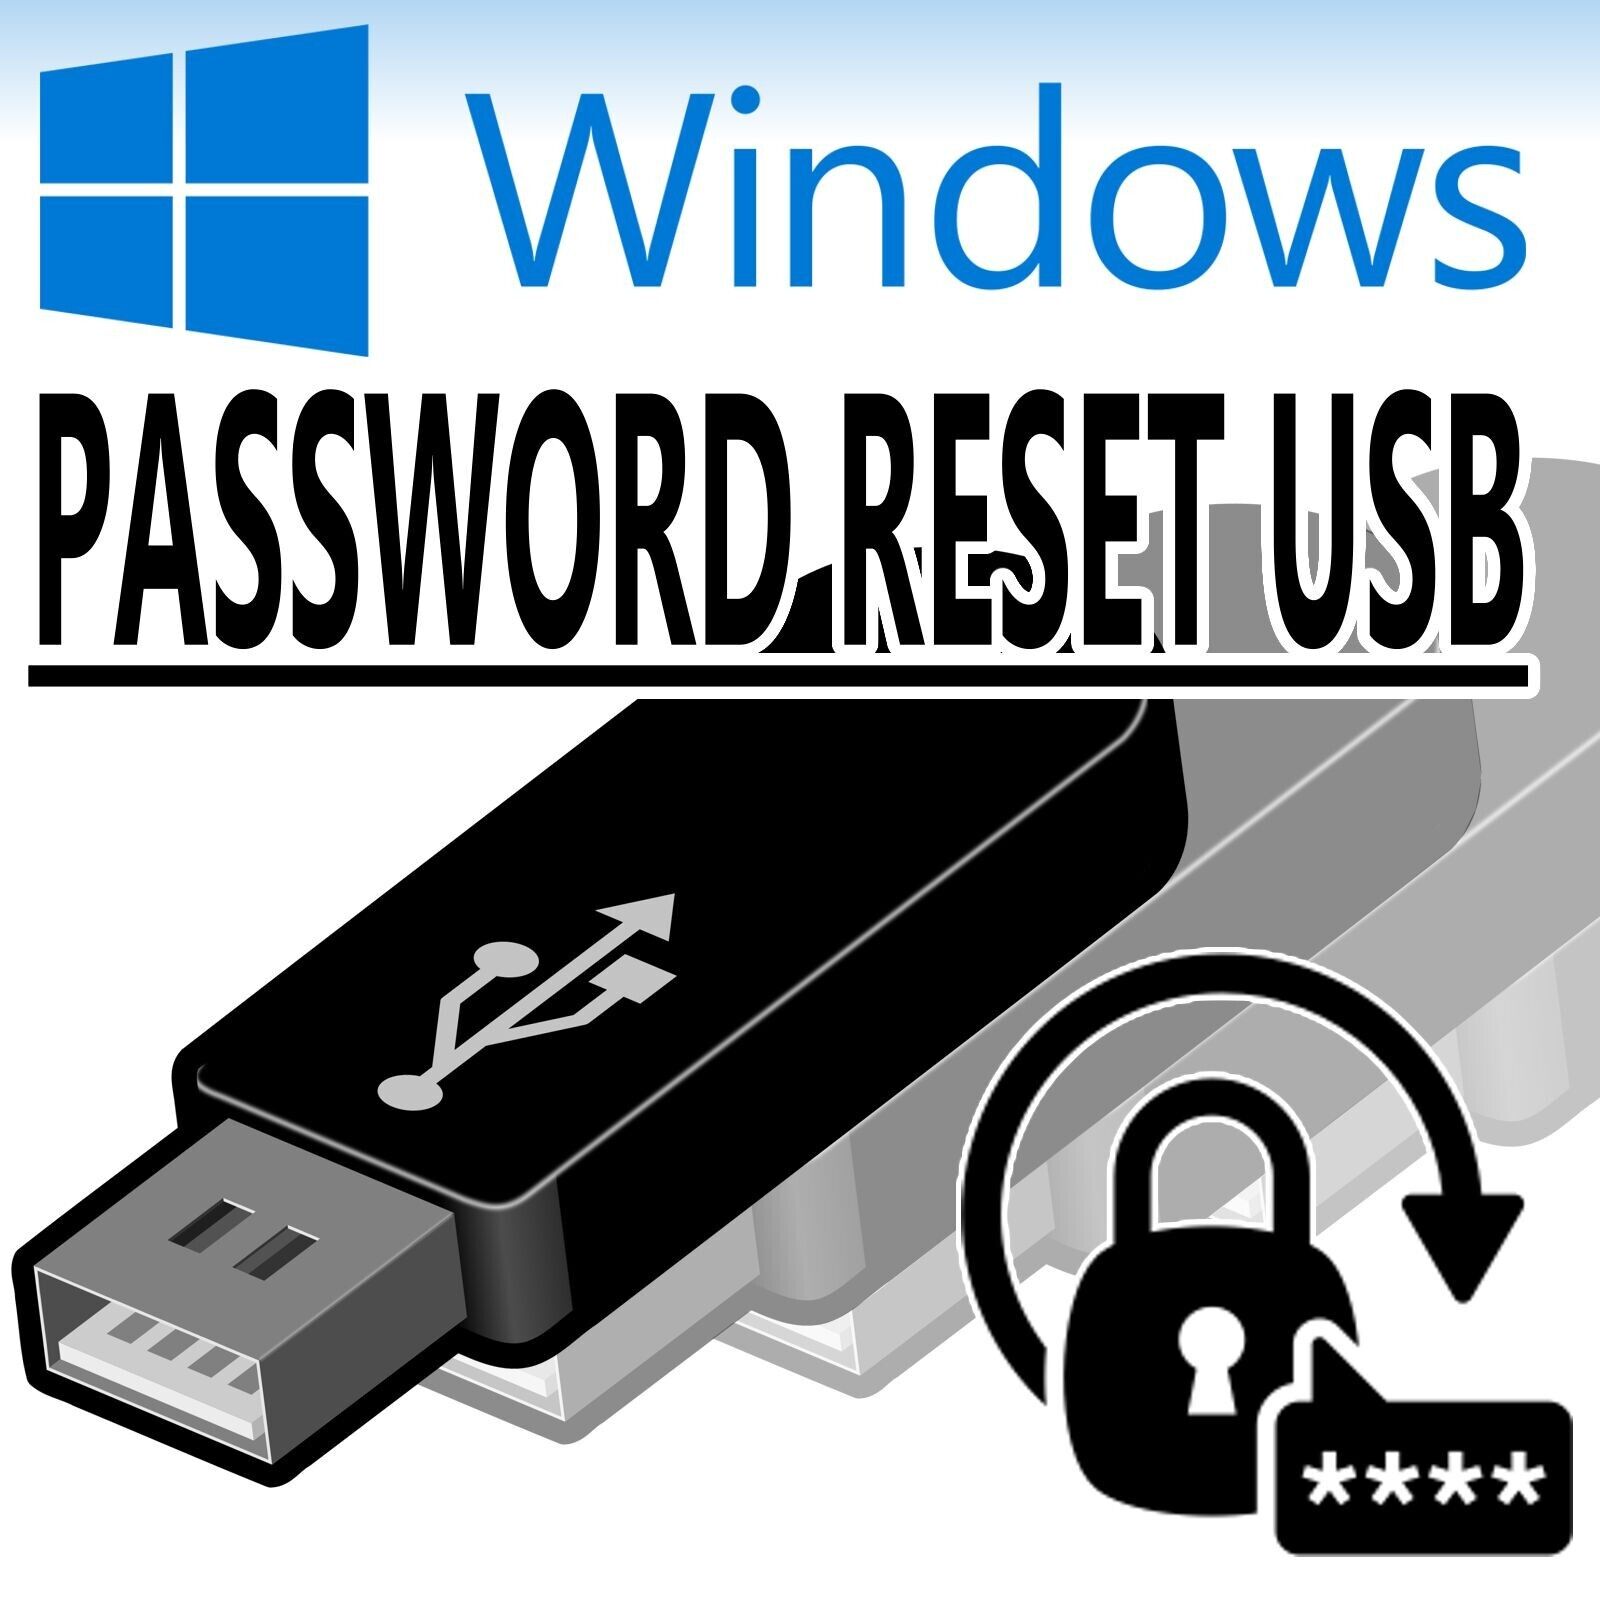 Bootable USB - Windows 10 Password Reset / Remover For Forgotten , Lost Password